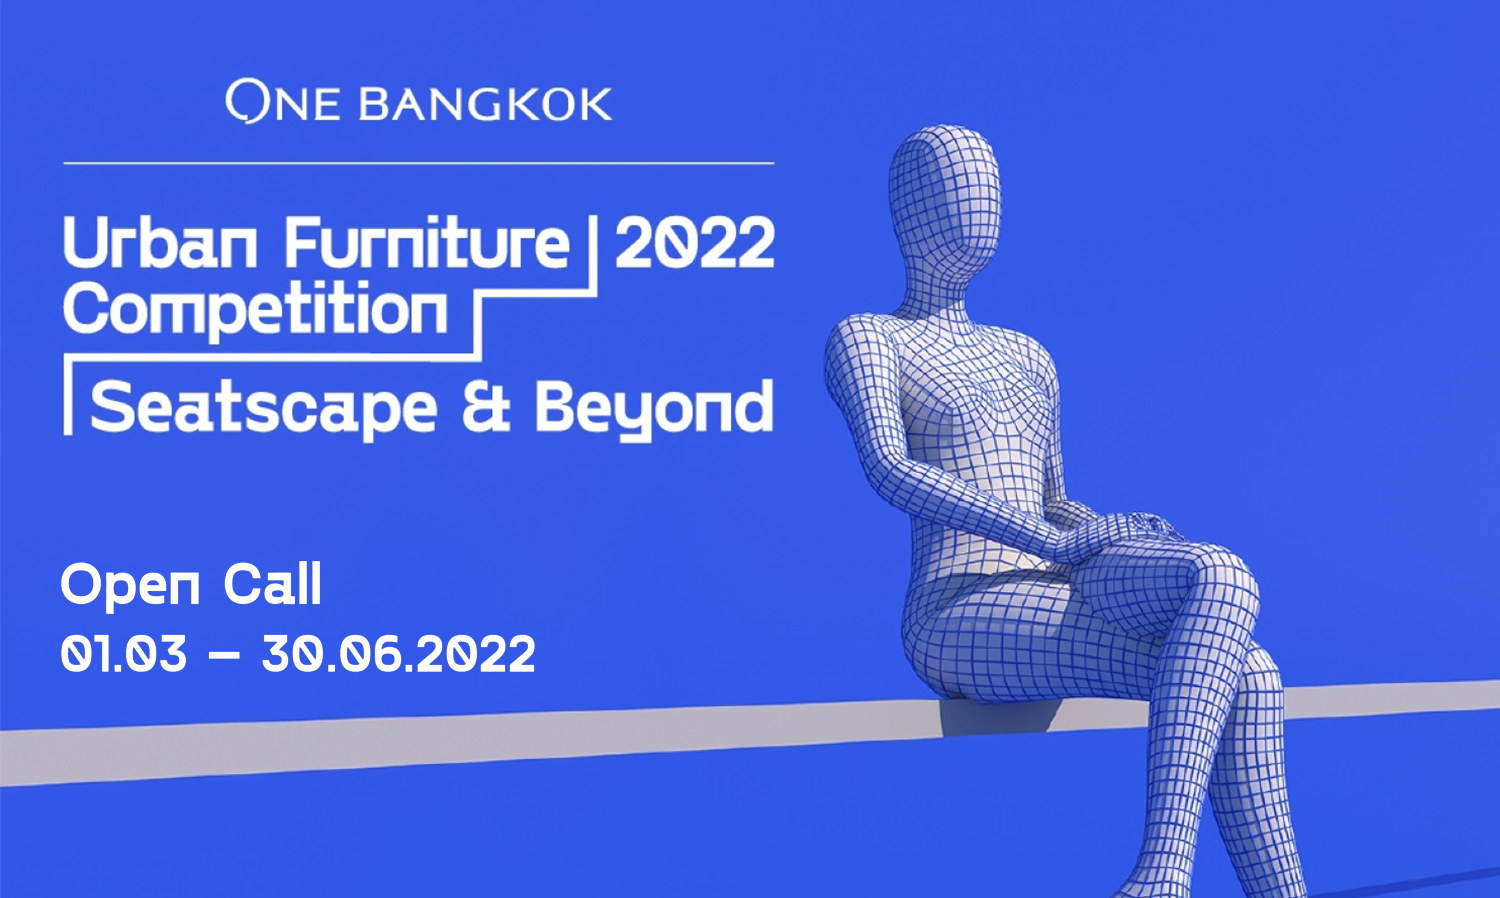  One Bangkok Urban Furniture Competition 2022 วันที่ 5 – 13 กุมภาพันธ์ 2565